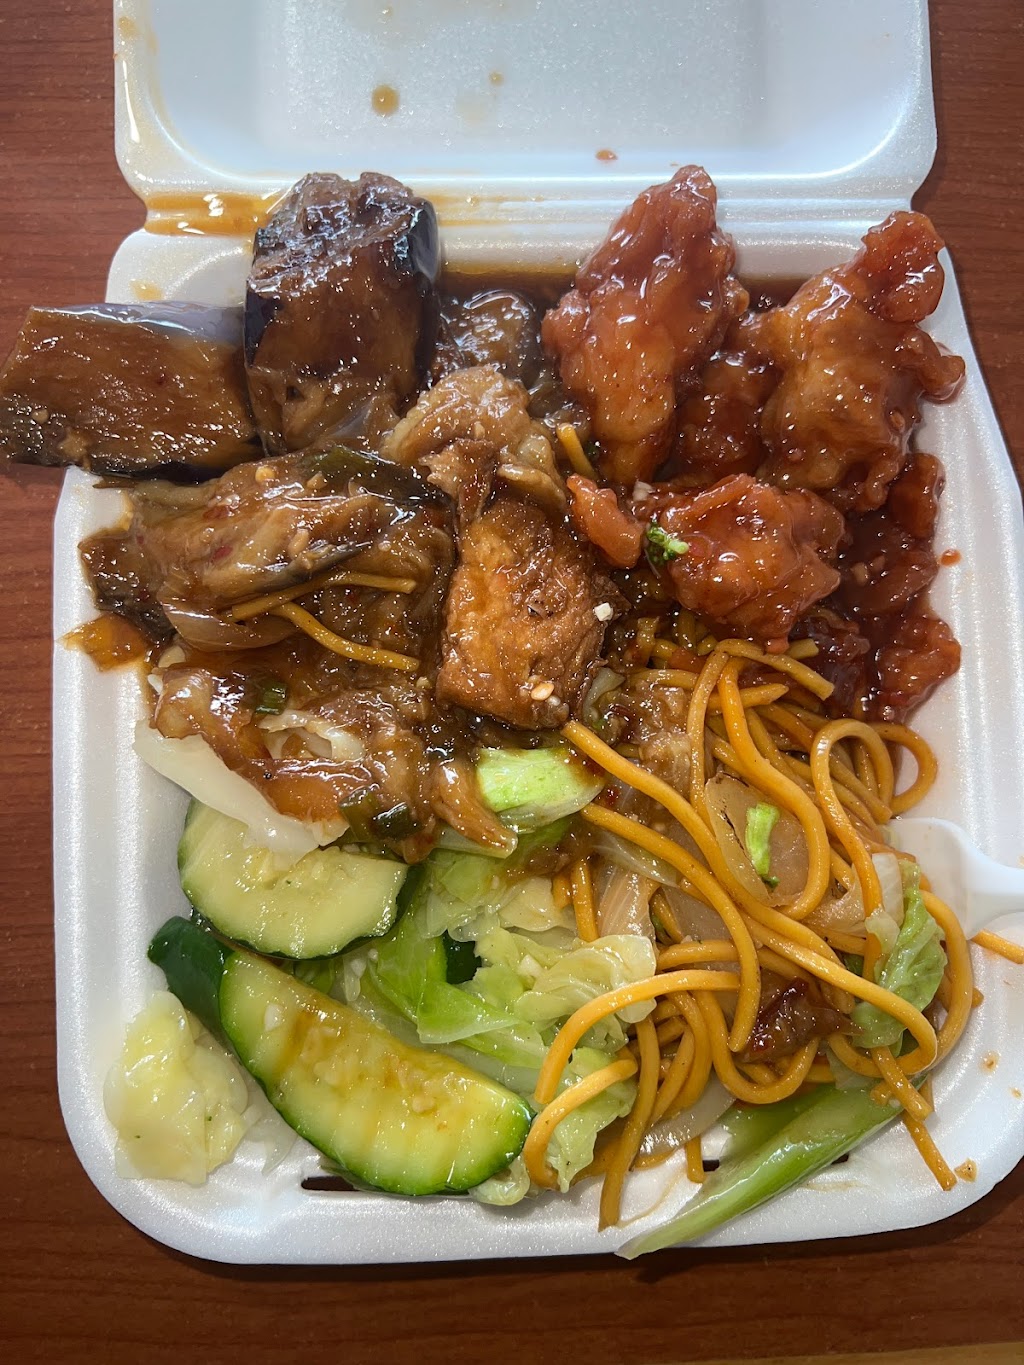 Happy Plus Chinese Restaurant | 6300 York Blvd, Los Angeles, CA 90042, USA | Phone: (323) 999-7168